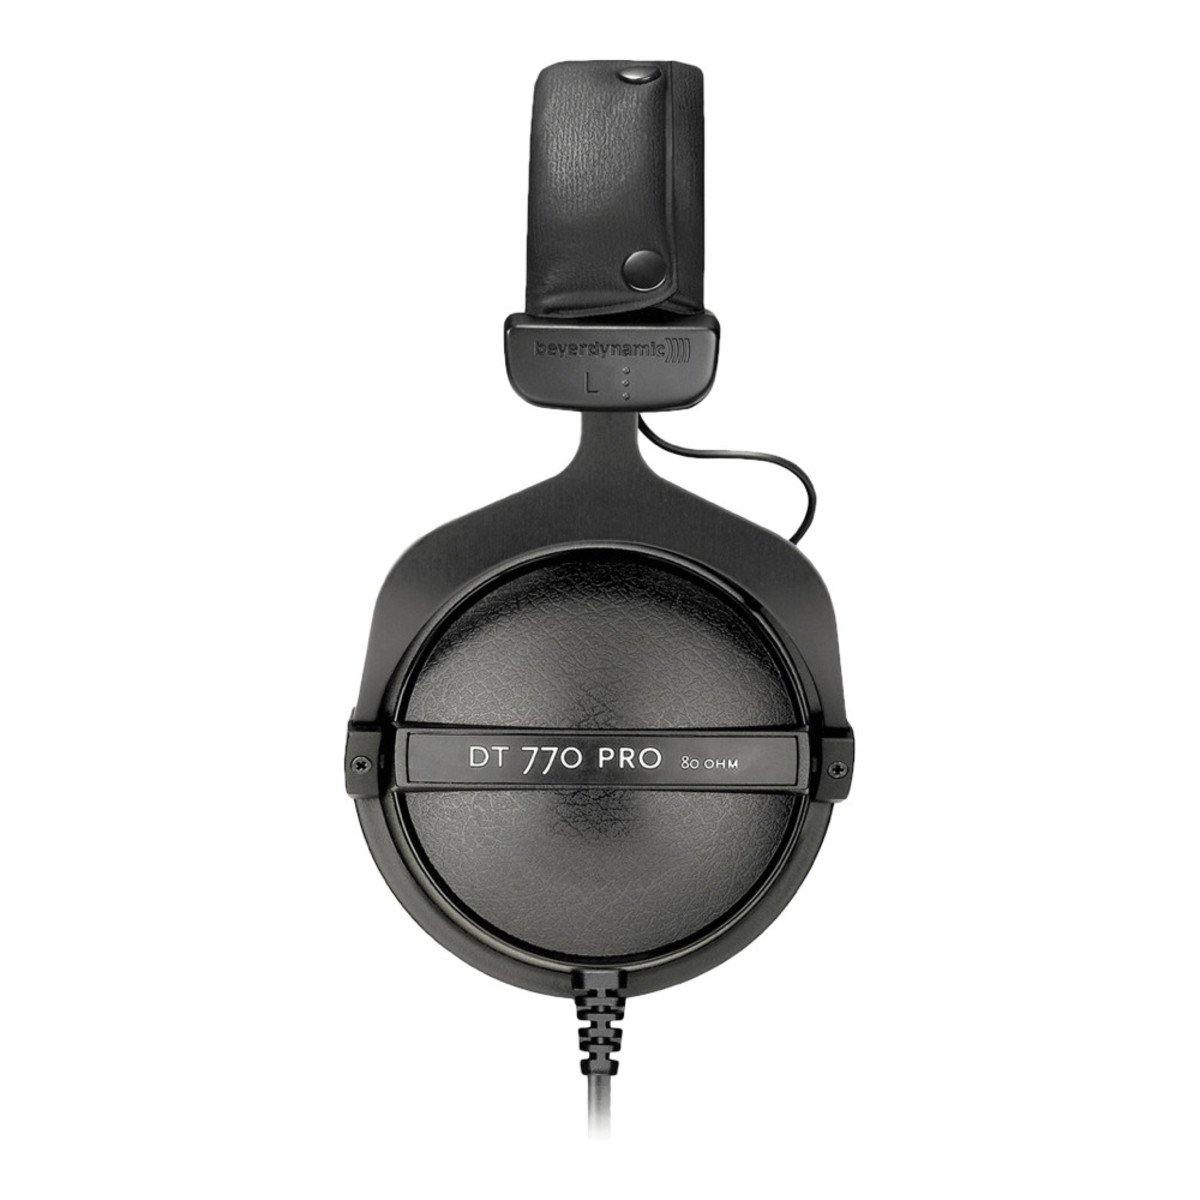 Beyerdynamic DT 770 Pro 80 Ohm Closed Back Headphones - DY Pro Audio